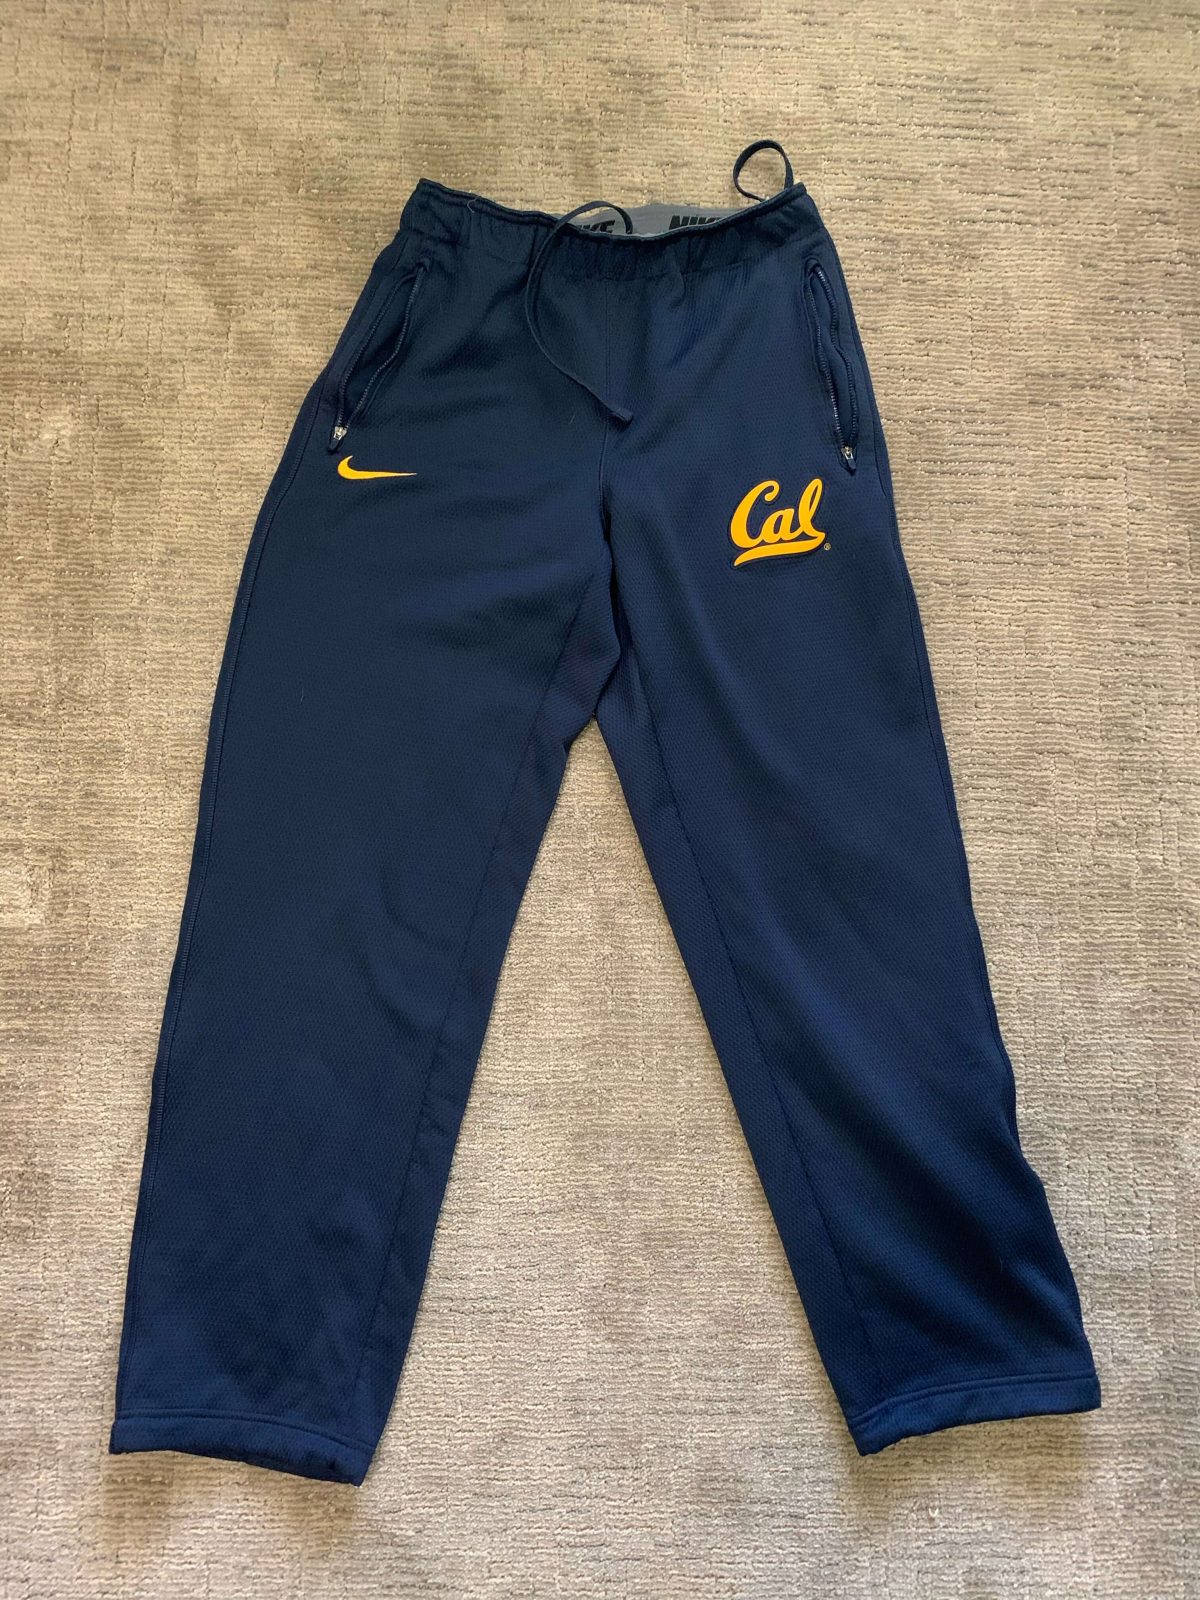 Haley Lukas California Berkeley Nike Dri-Fit Sweat Pants : NARP Clothing